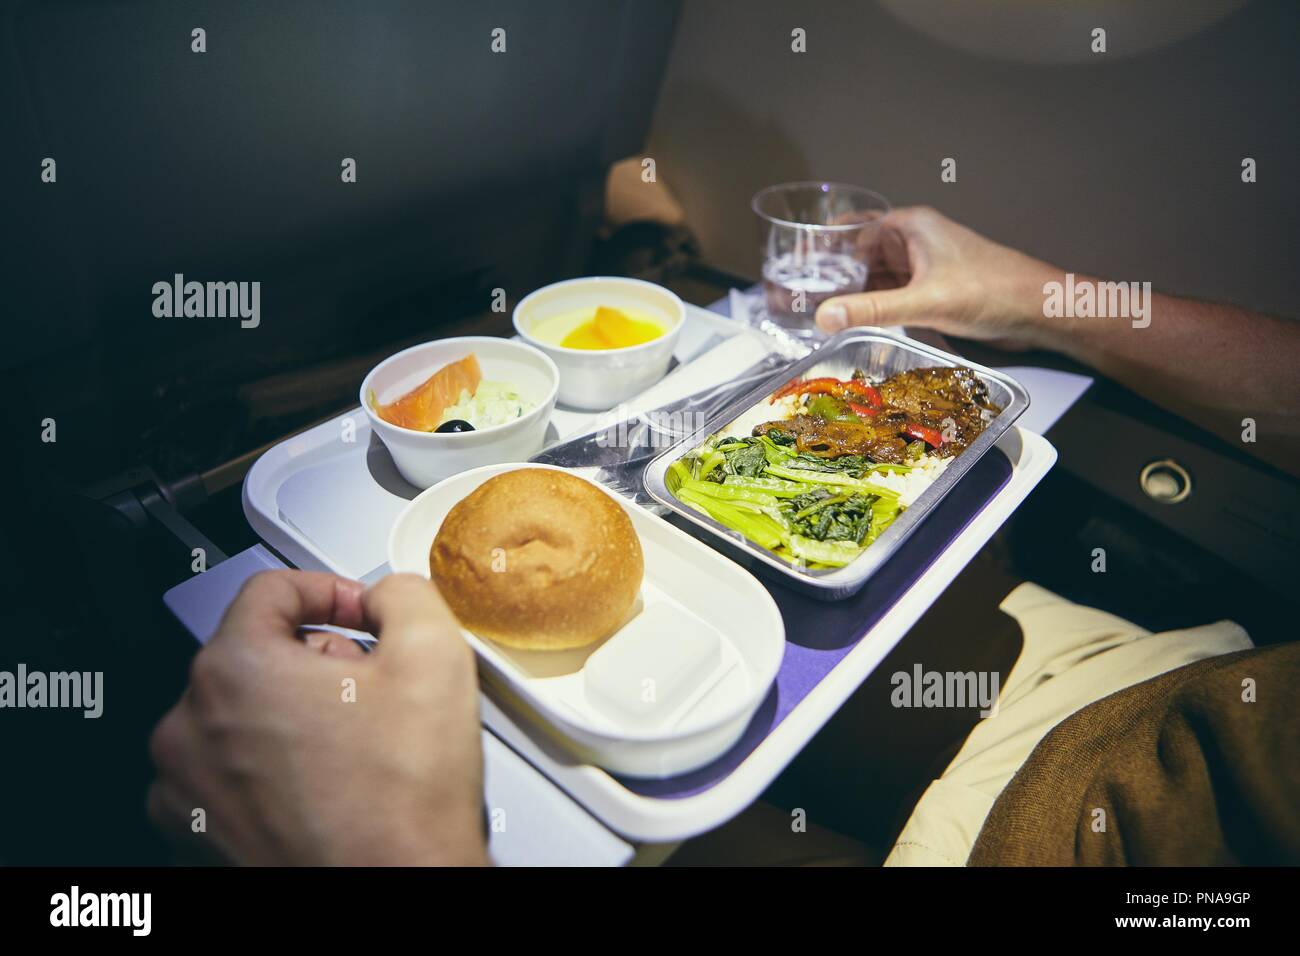 Traveling by airplane. Passenger enjoying dinner in economy class during long haul flight. Stock Photo